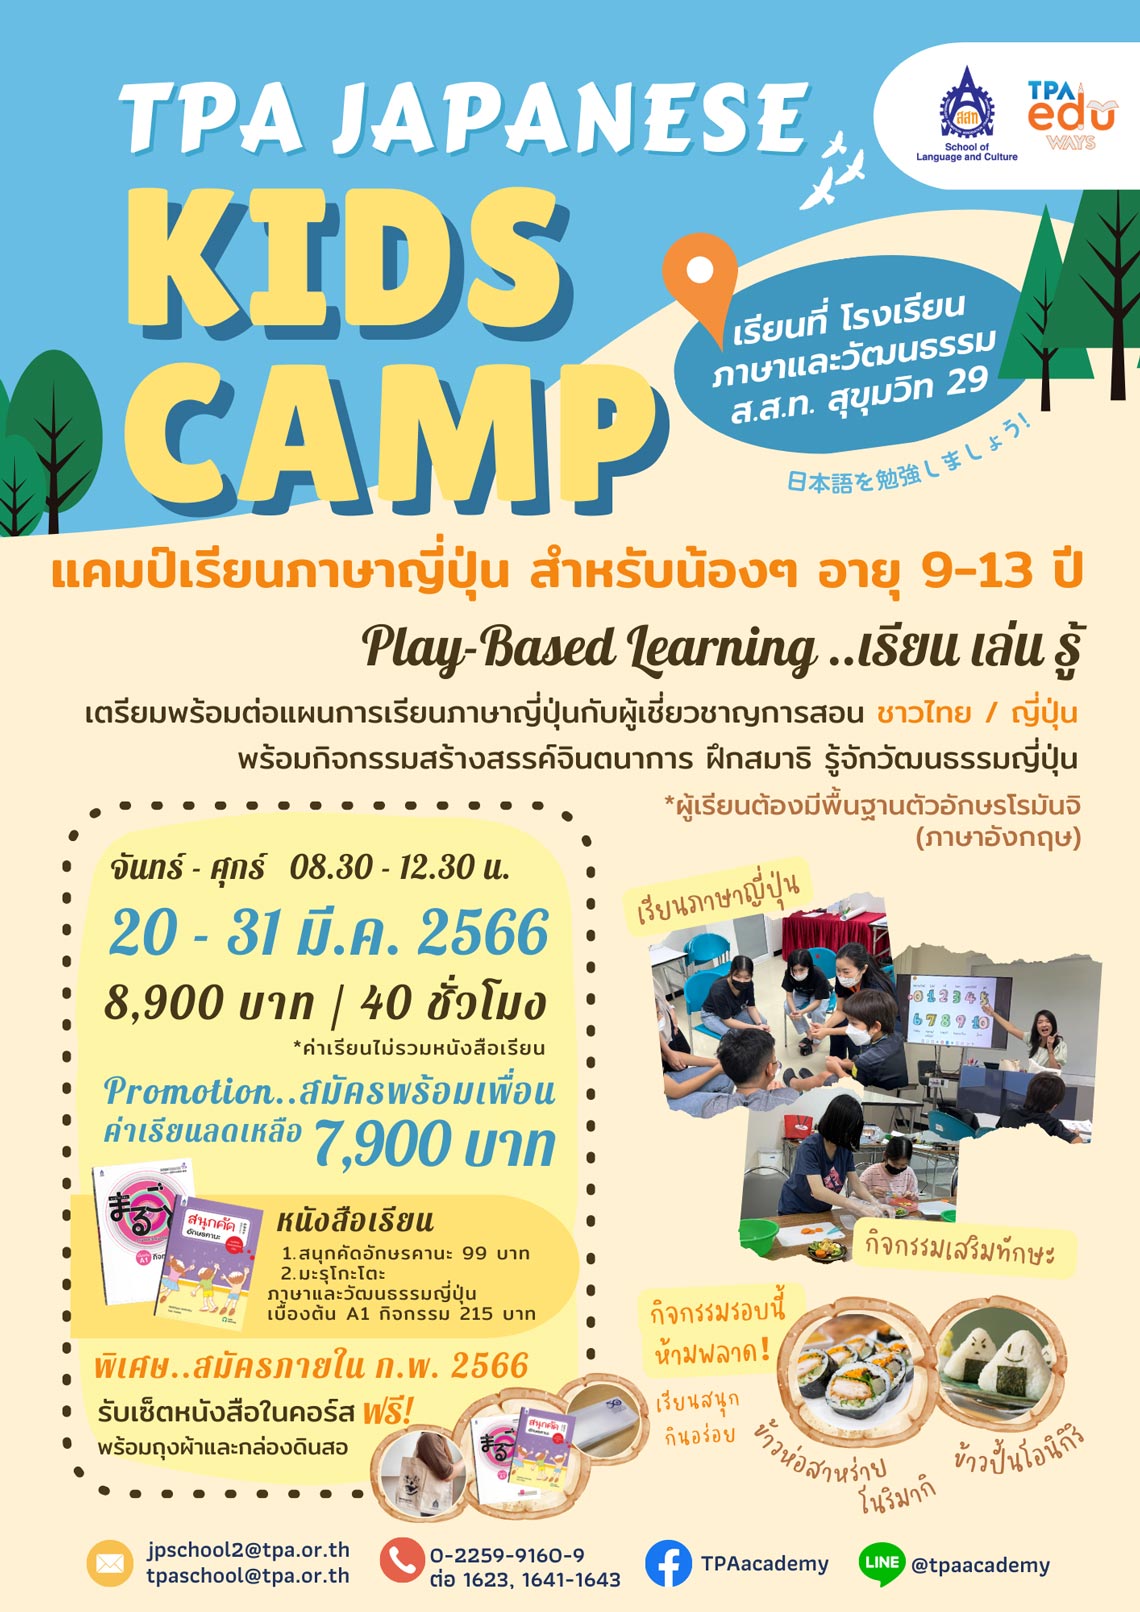 TPA Japanese Kids Camp